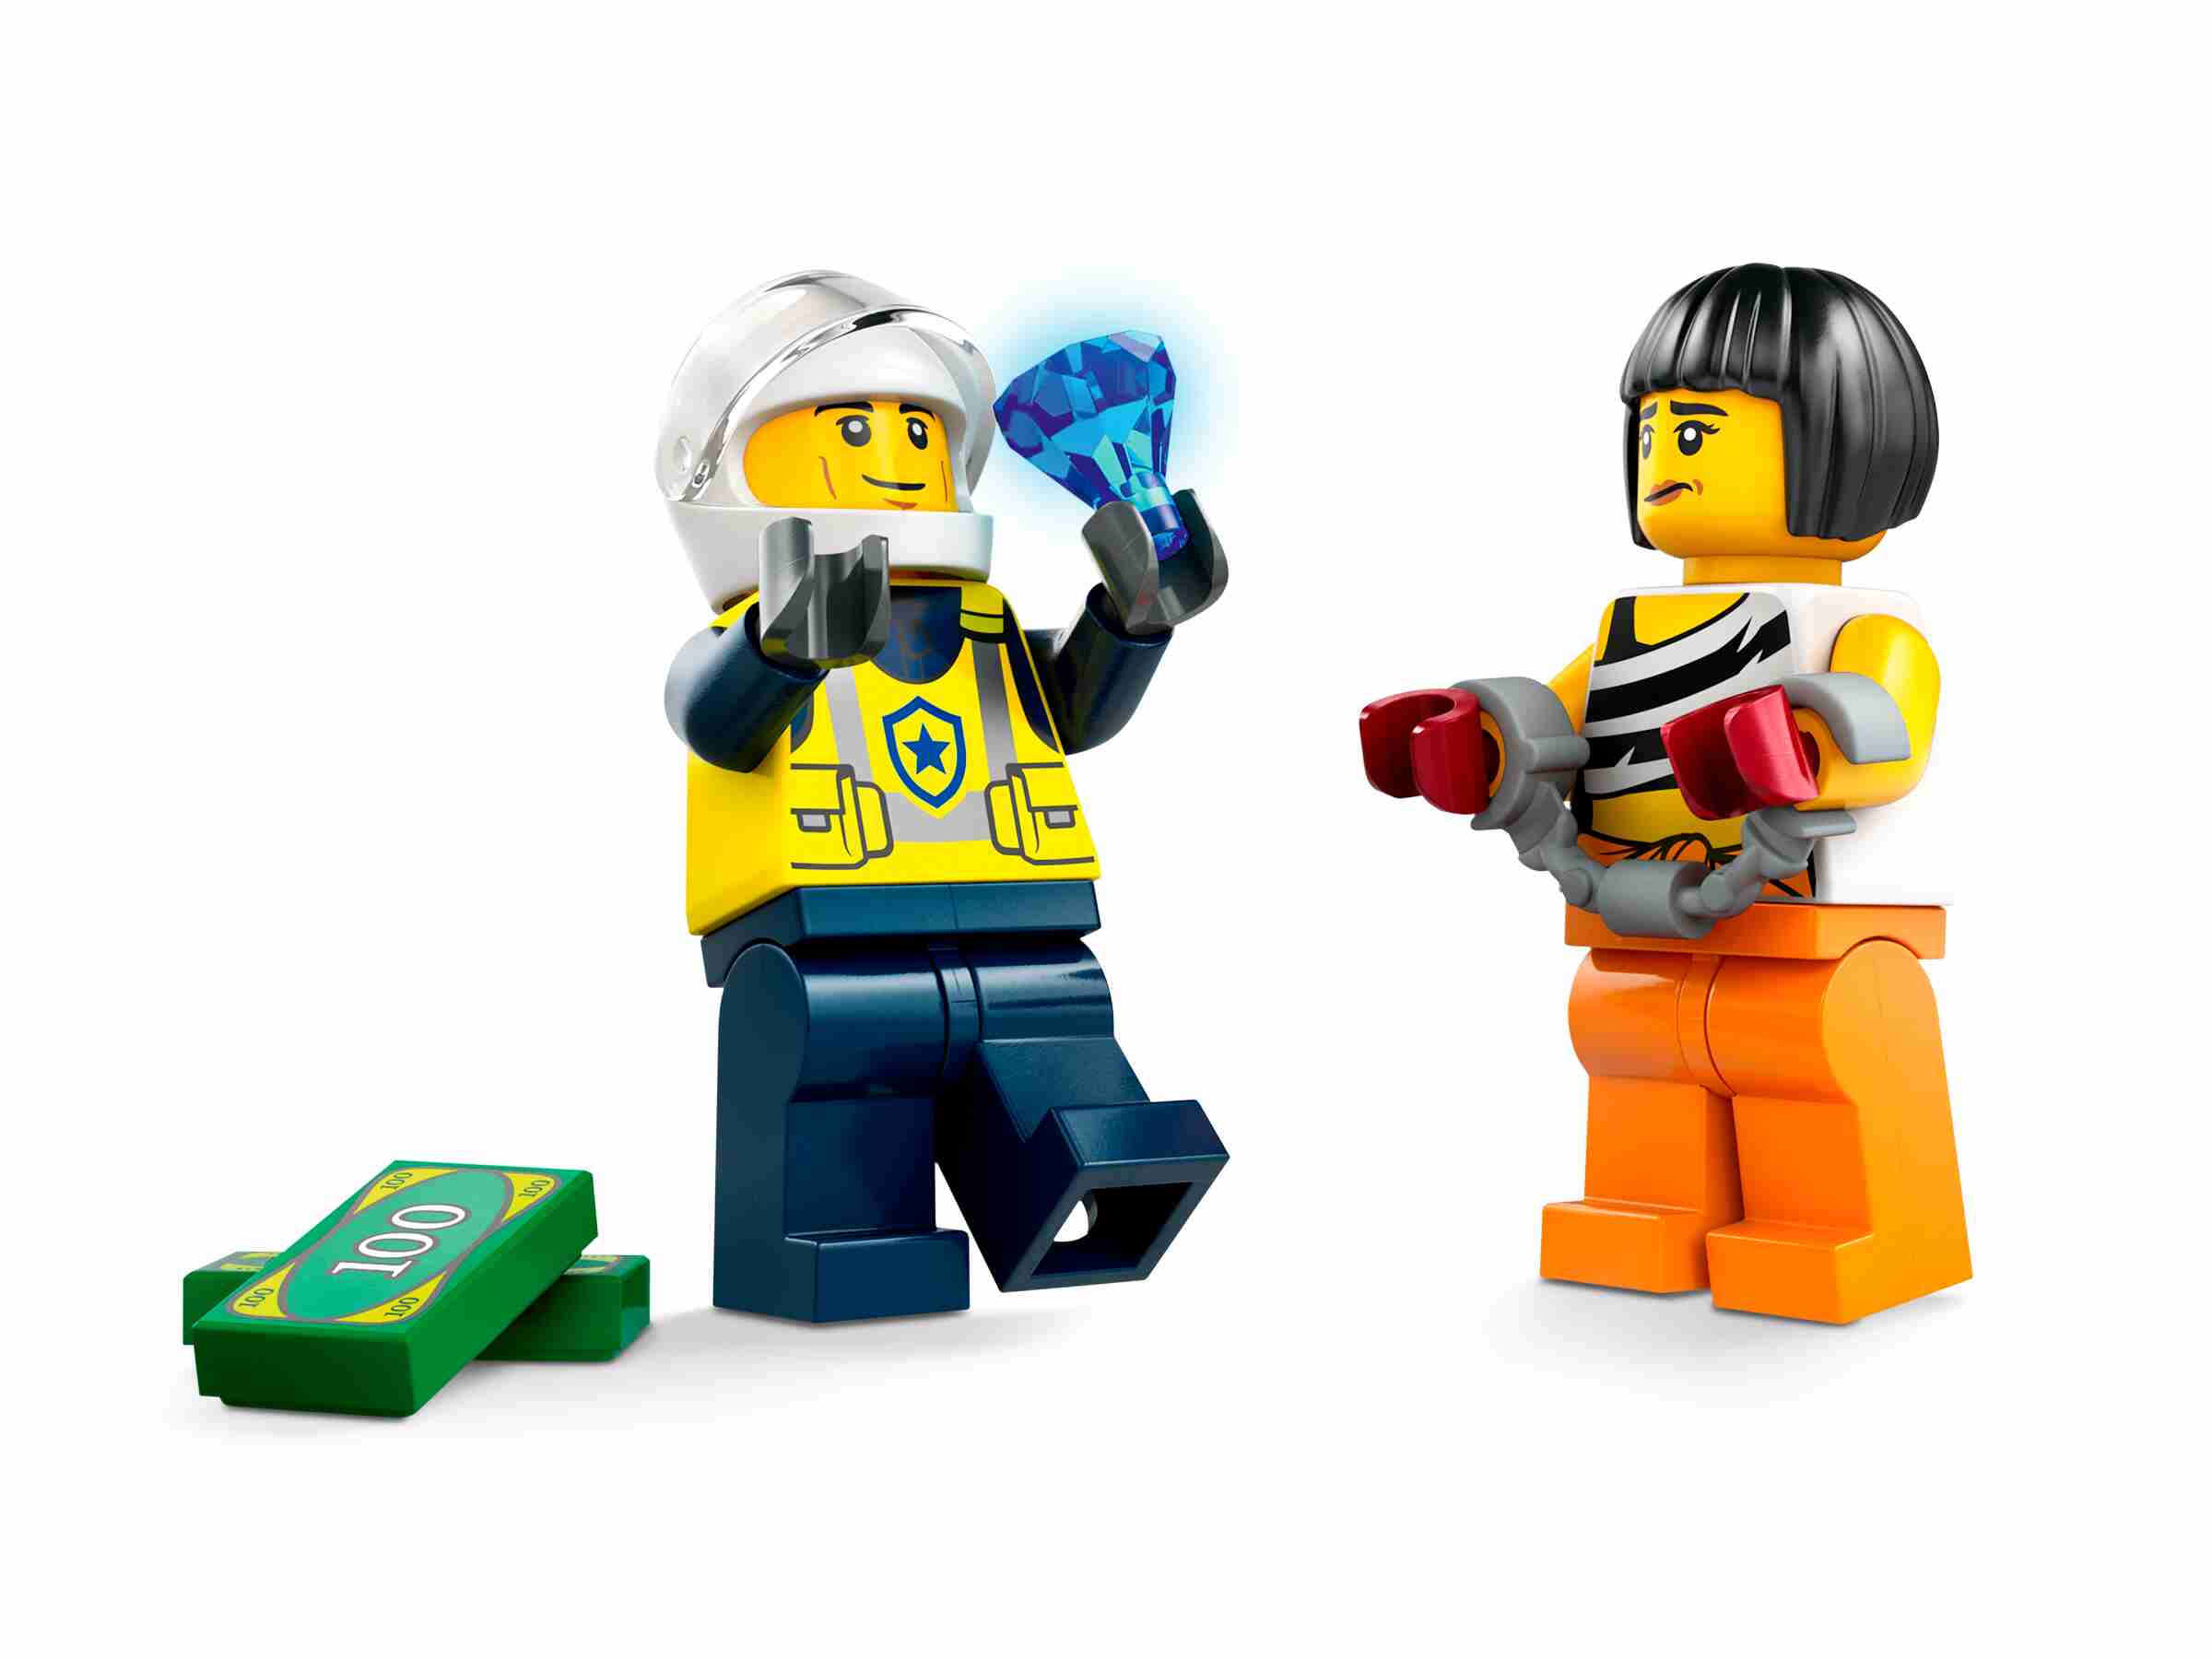 LEGO 60415 City Verfolgungsjagd mit Polizeiauto und Muscle Car, 2 Minifiguren